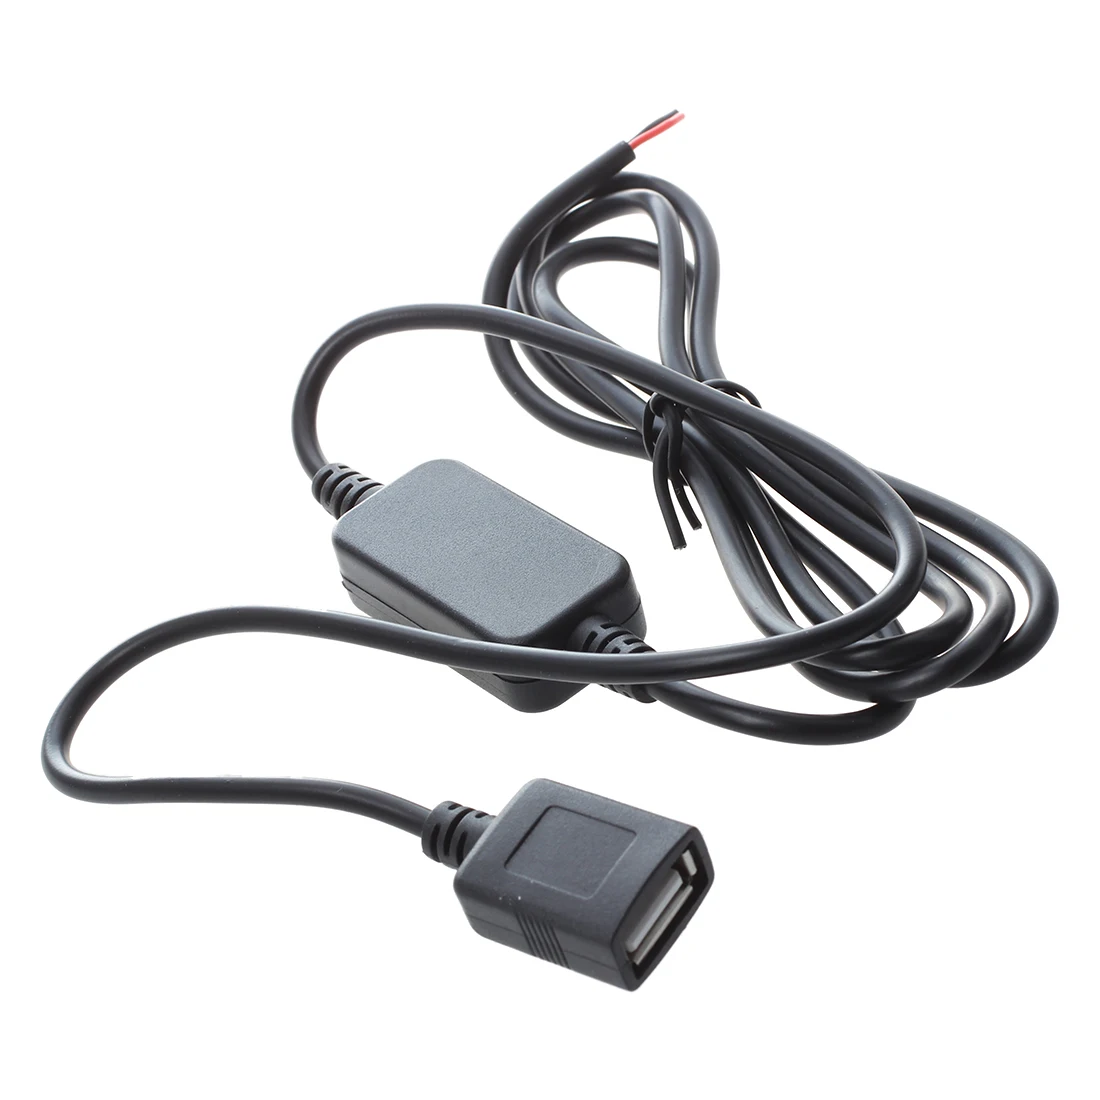 USB конвертер трансформатор Питание Напряжение 5 V-12 V